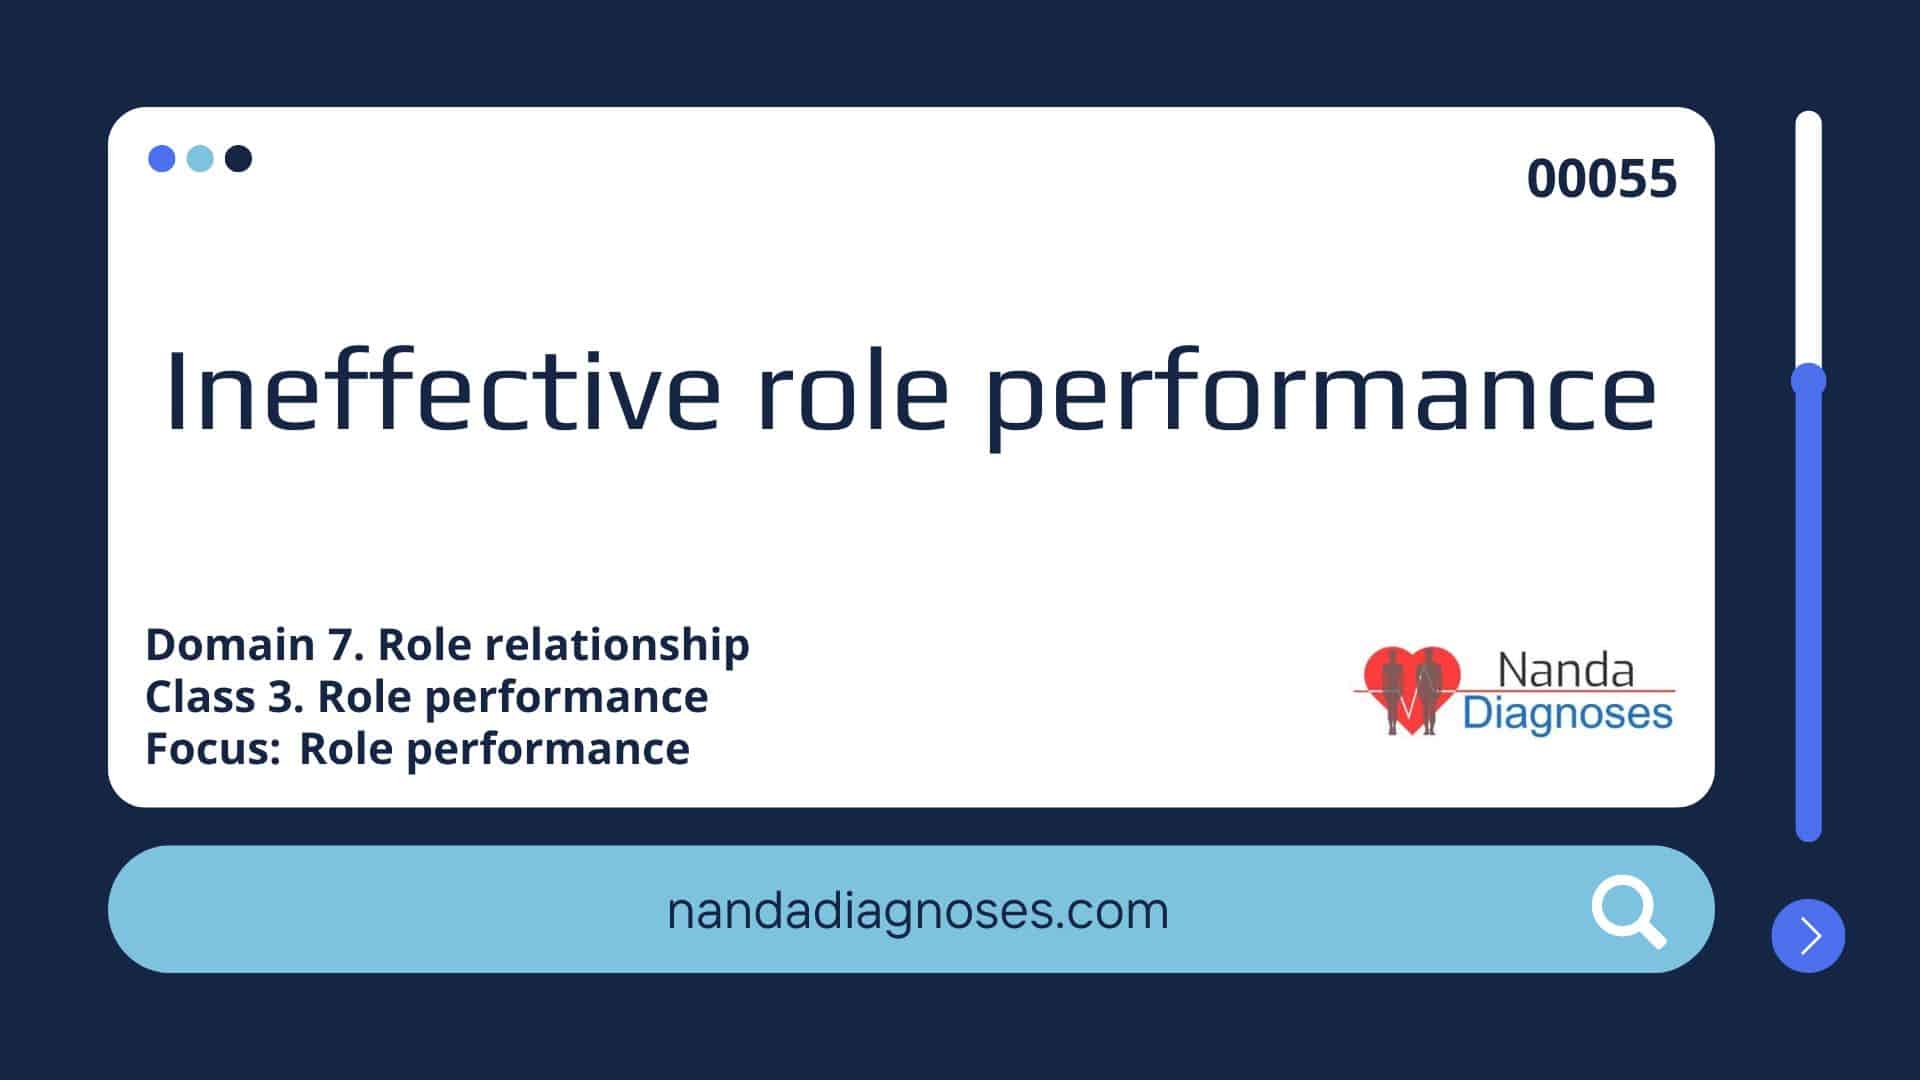 Nursing diagnosis Ineffective role performance